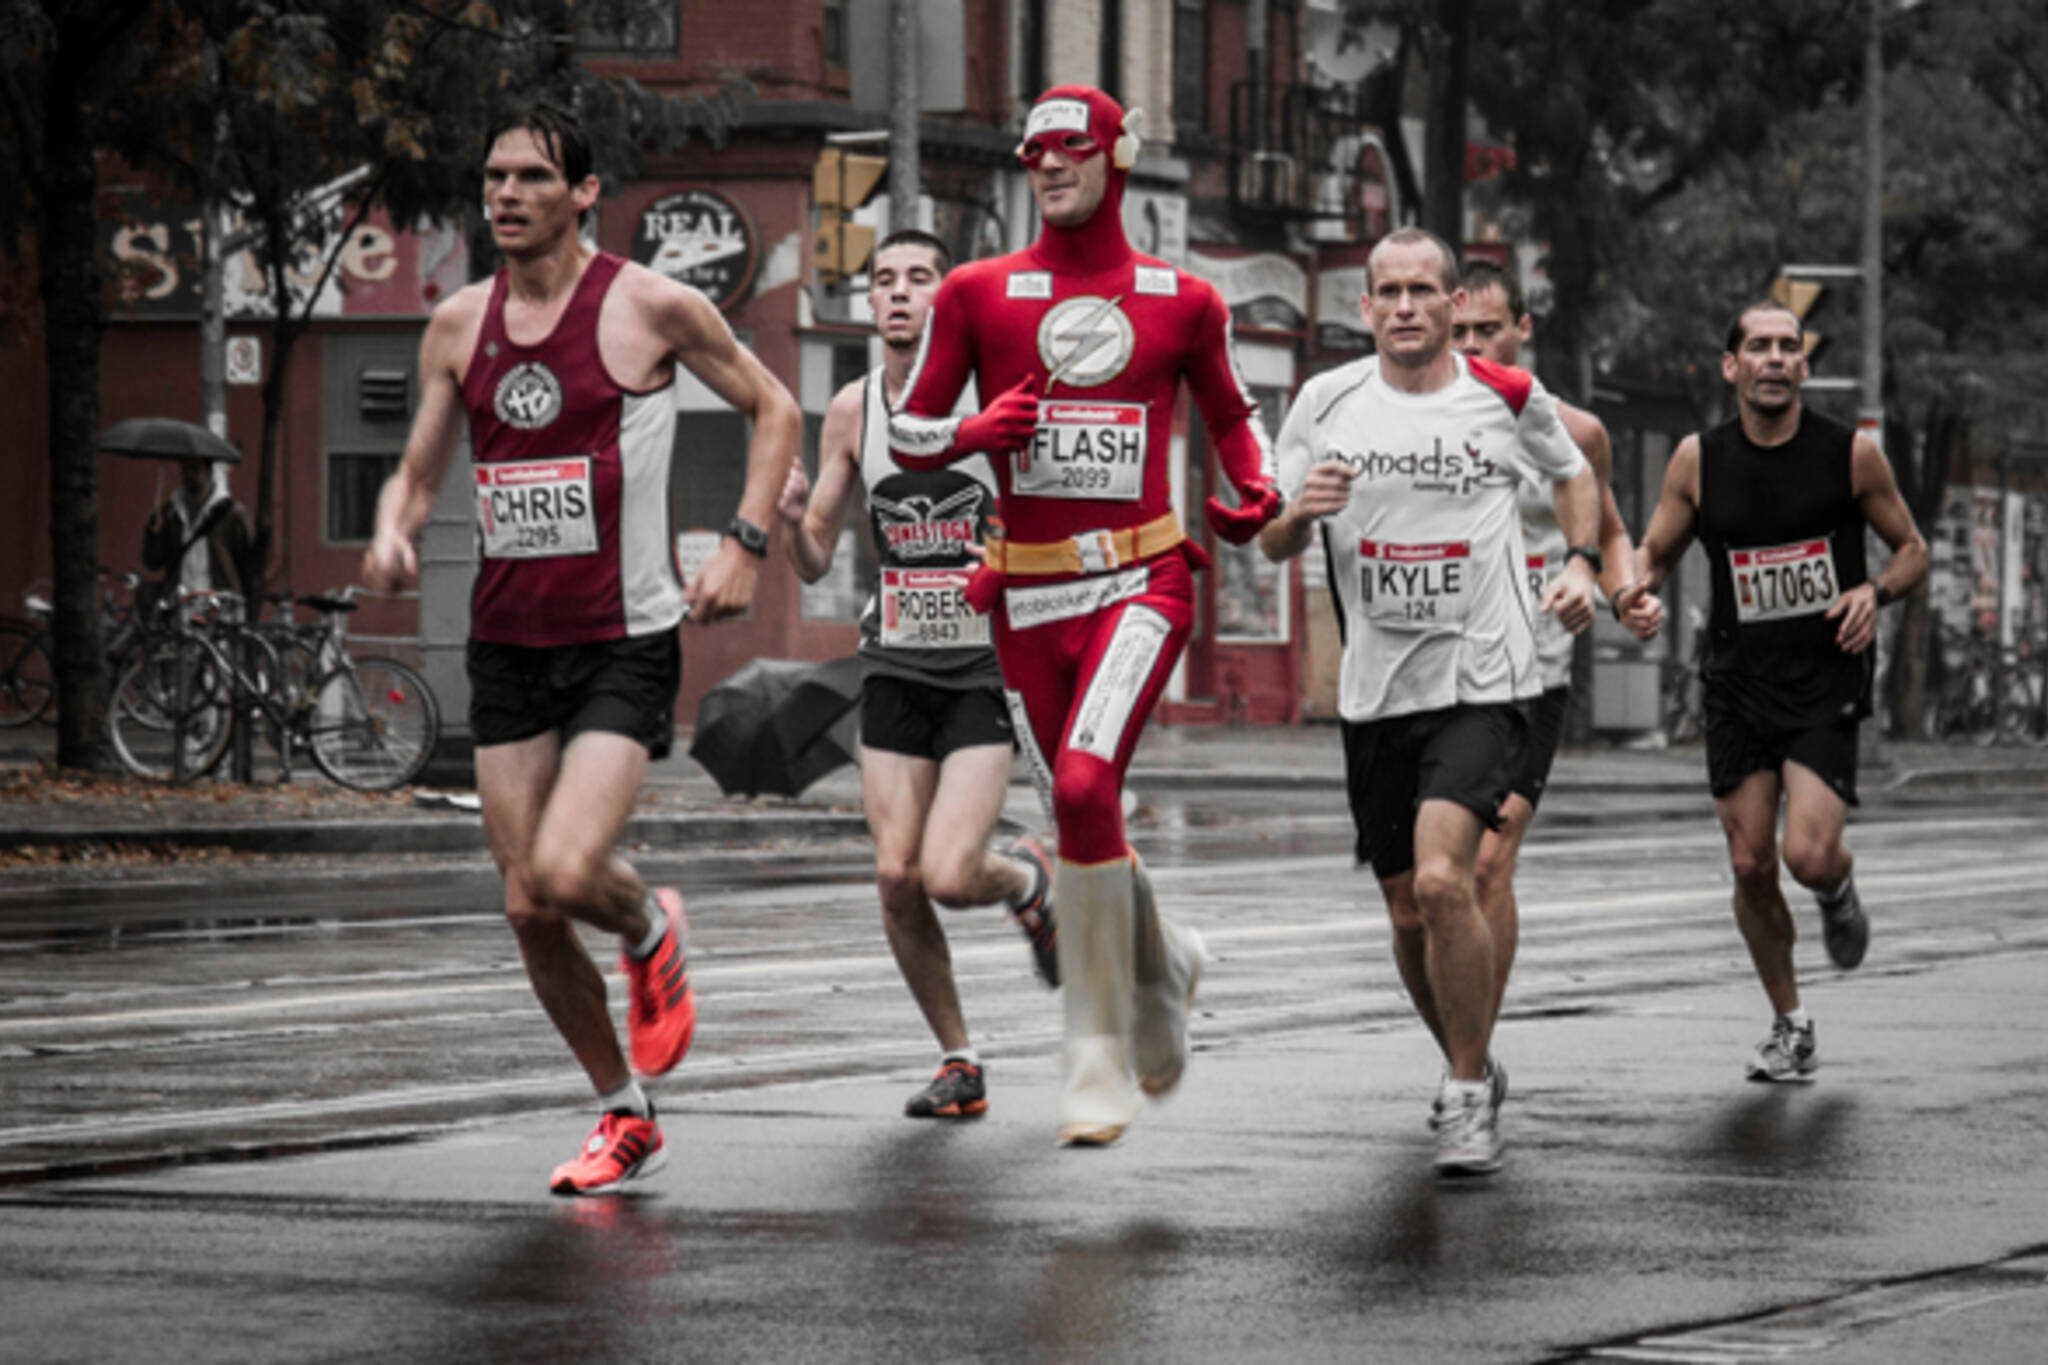 2013 running events in Toronto